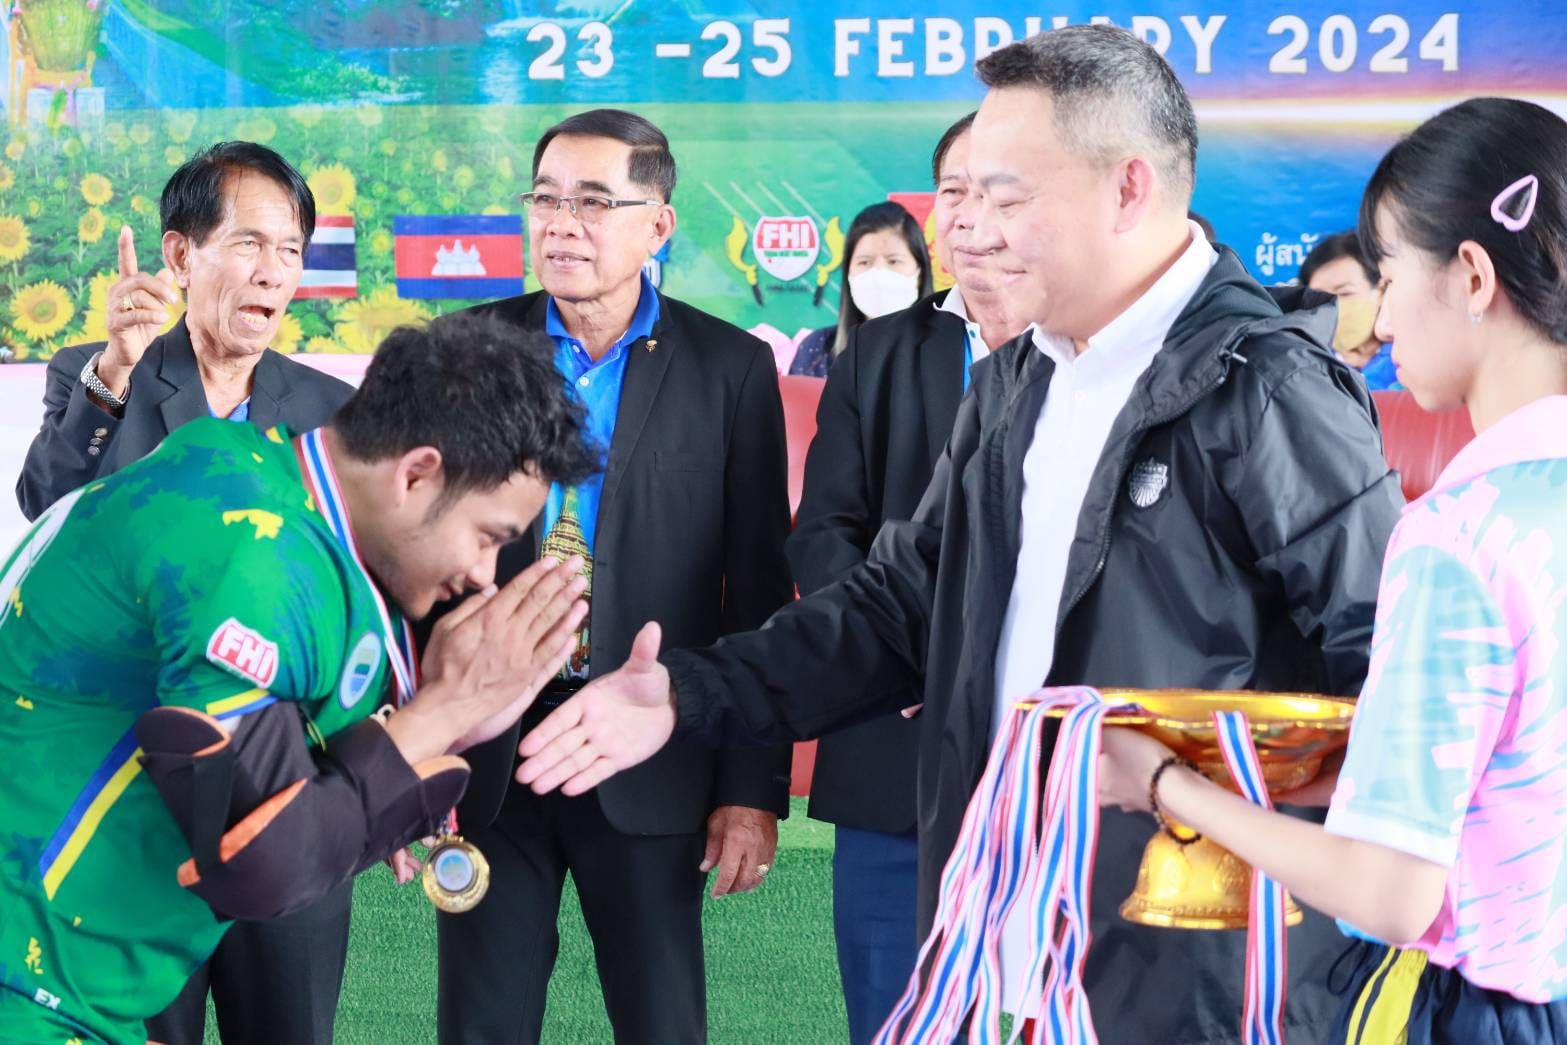 Membanggakan! Hockey Kota Bandung Berhasil Merebut Gelar Juara pada Kejuaraan Internasional di Thailand